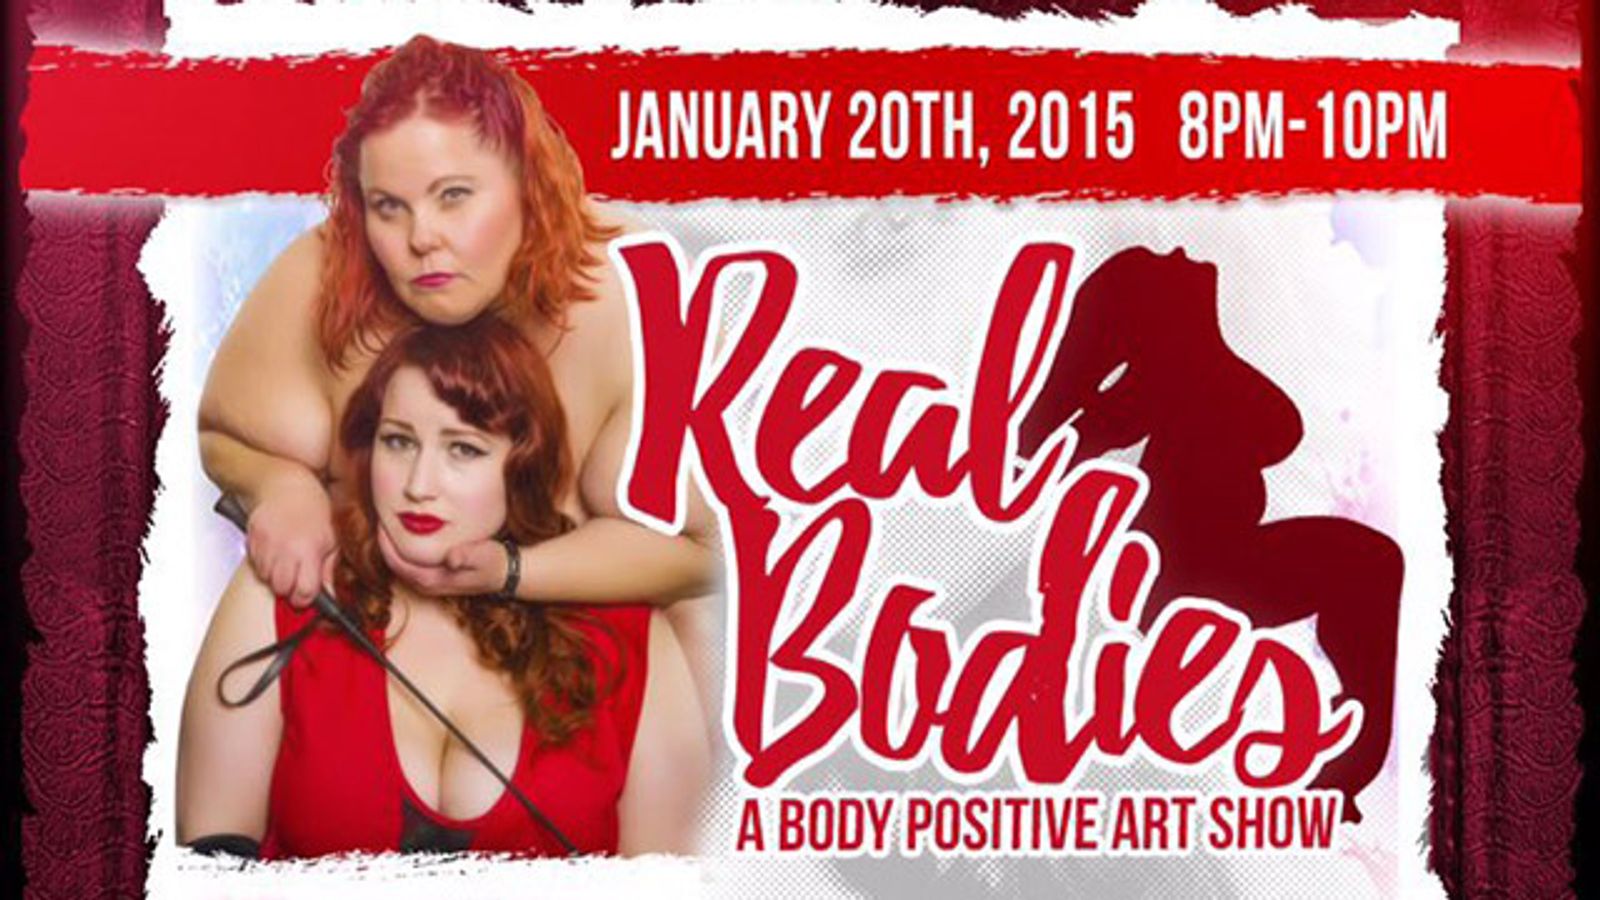 Eliza Allure Hosting Body Positive Art Show In Las Vegas